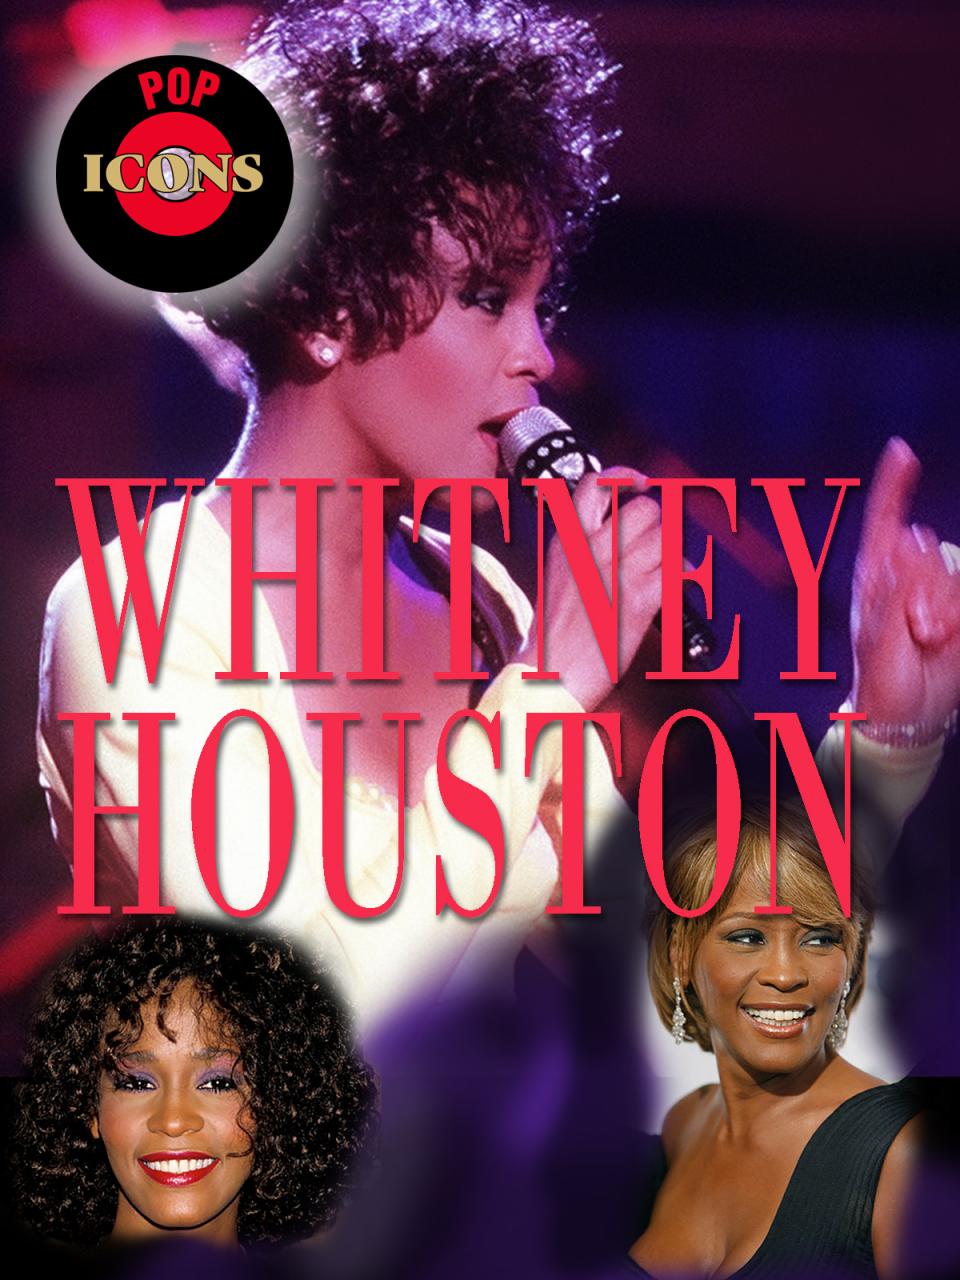 Pop Icons: Whitney Houston